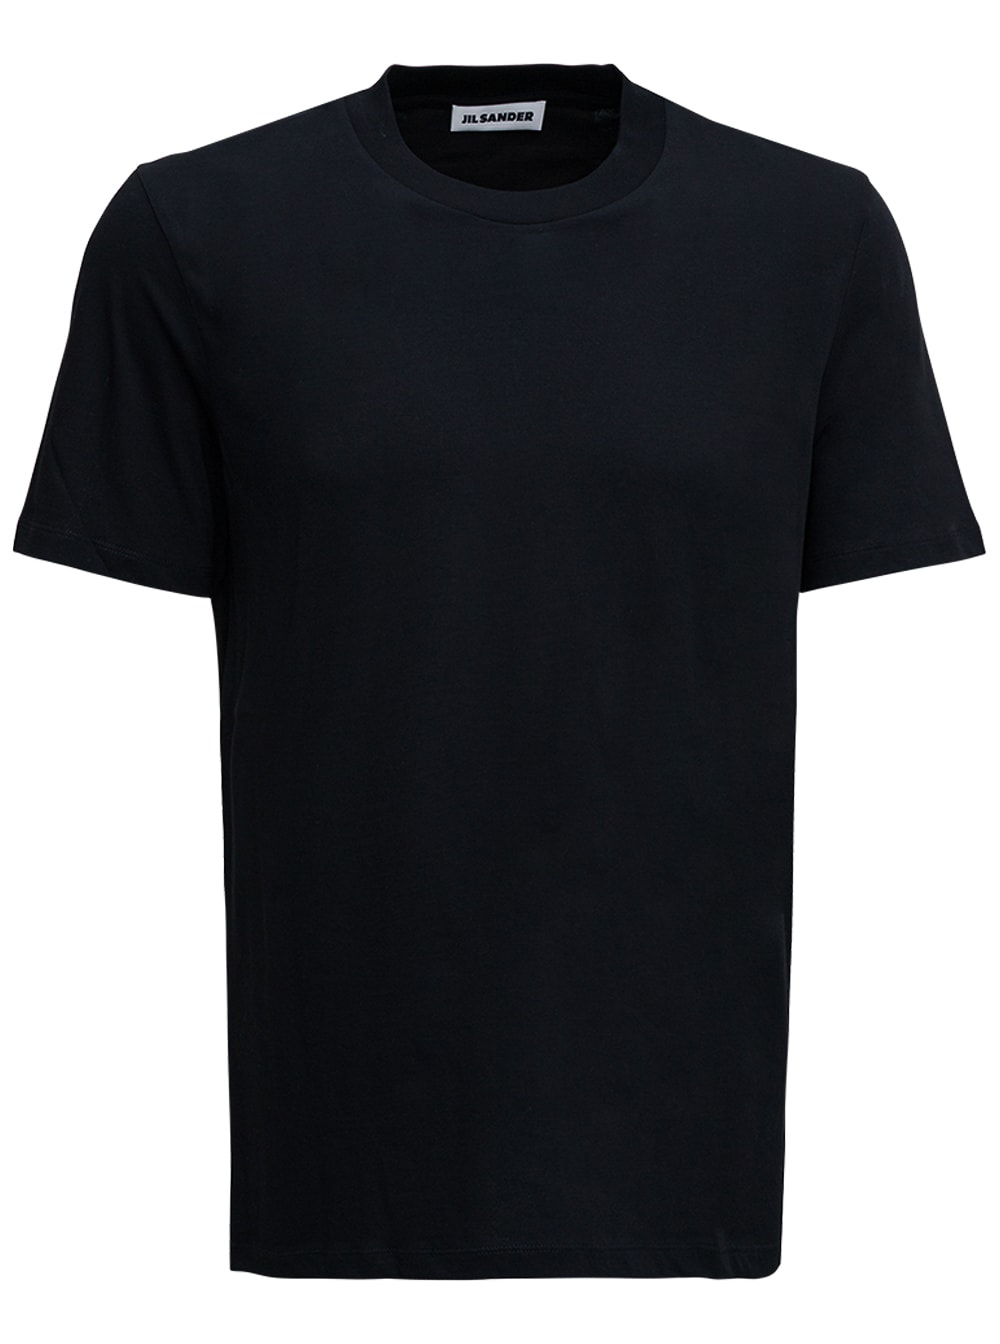 Jil Sander Black Cotton Crew Neck T-shirt